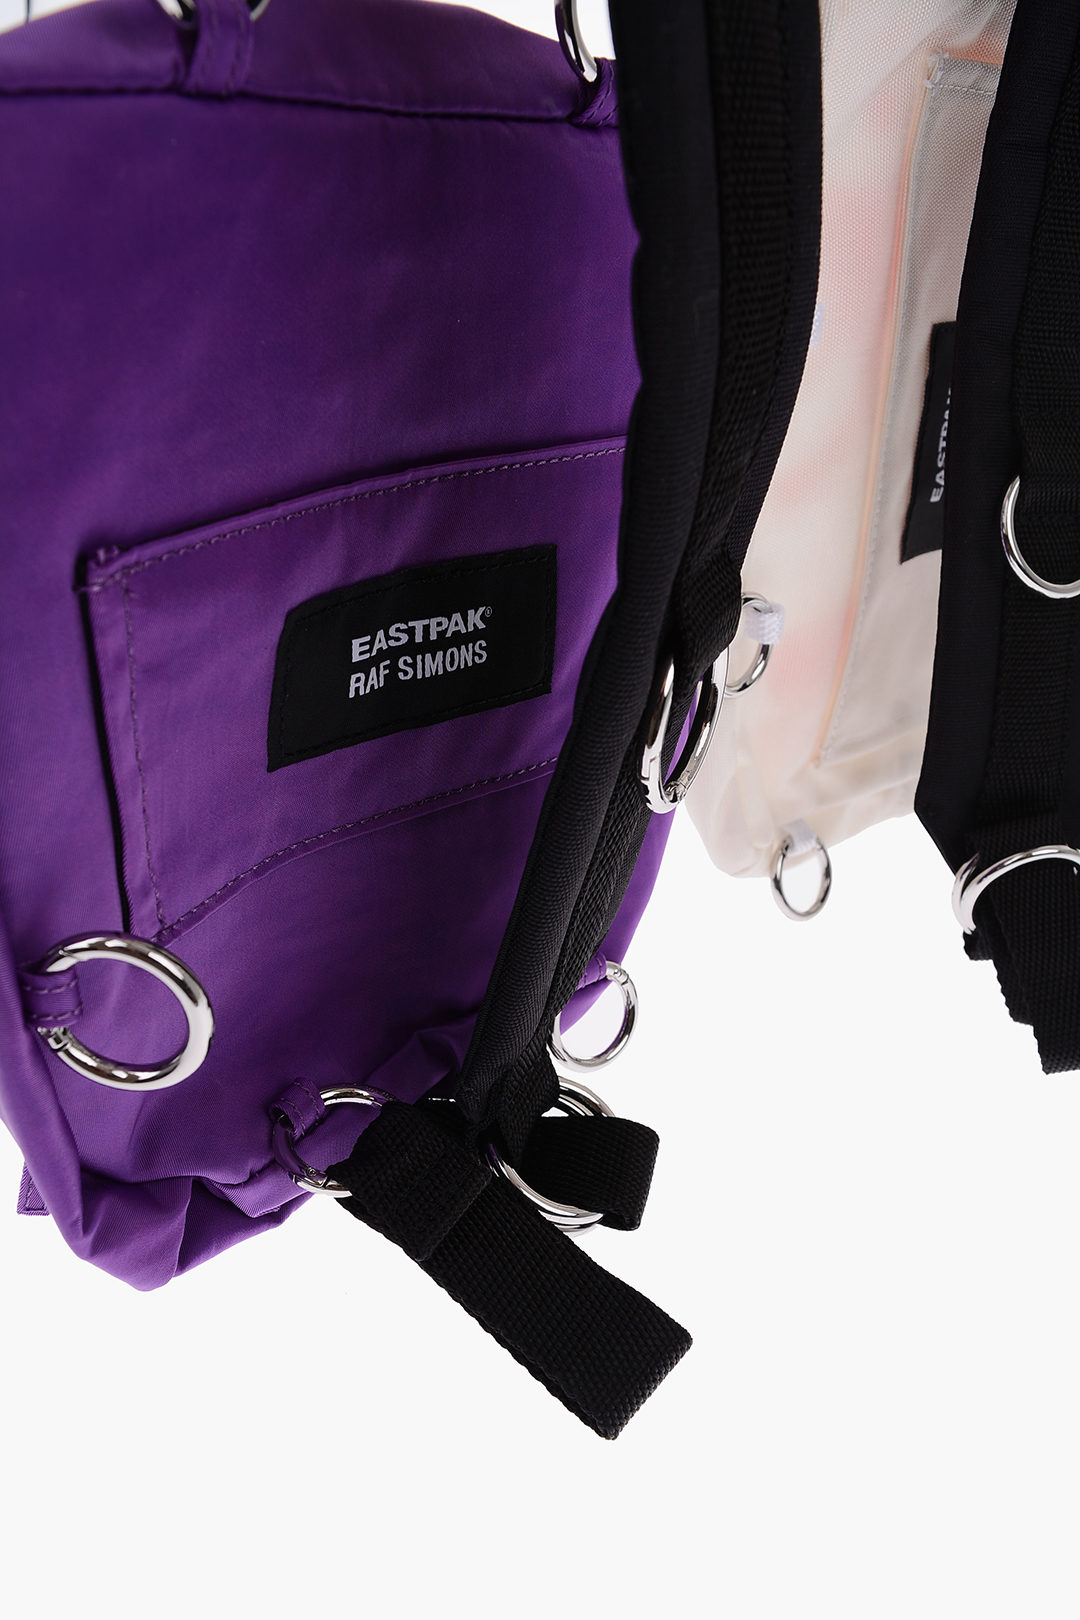 Eastpak RAF SIMONS multi pockets RS POSTER backpack unisex men women -  Glamood Outlet